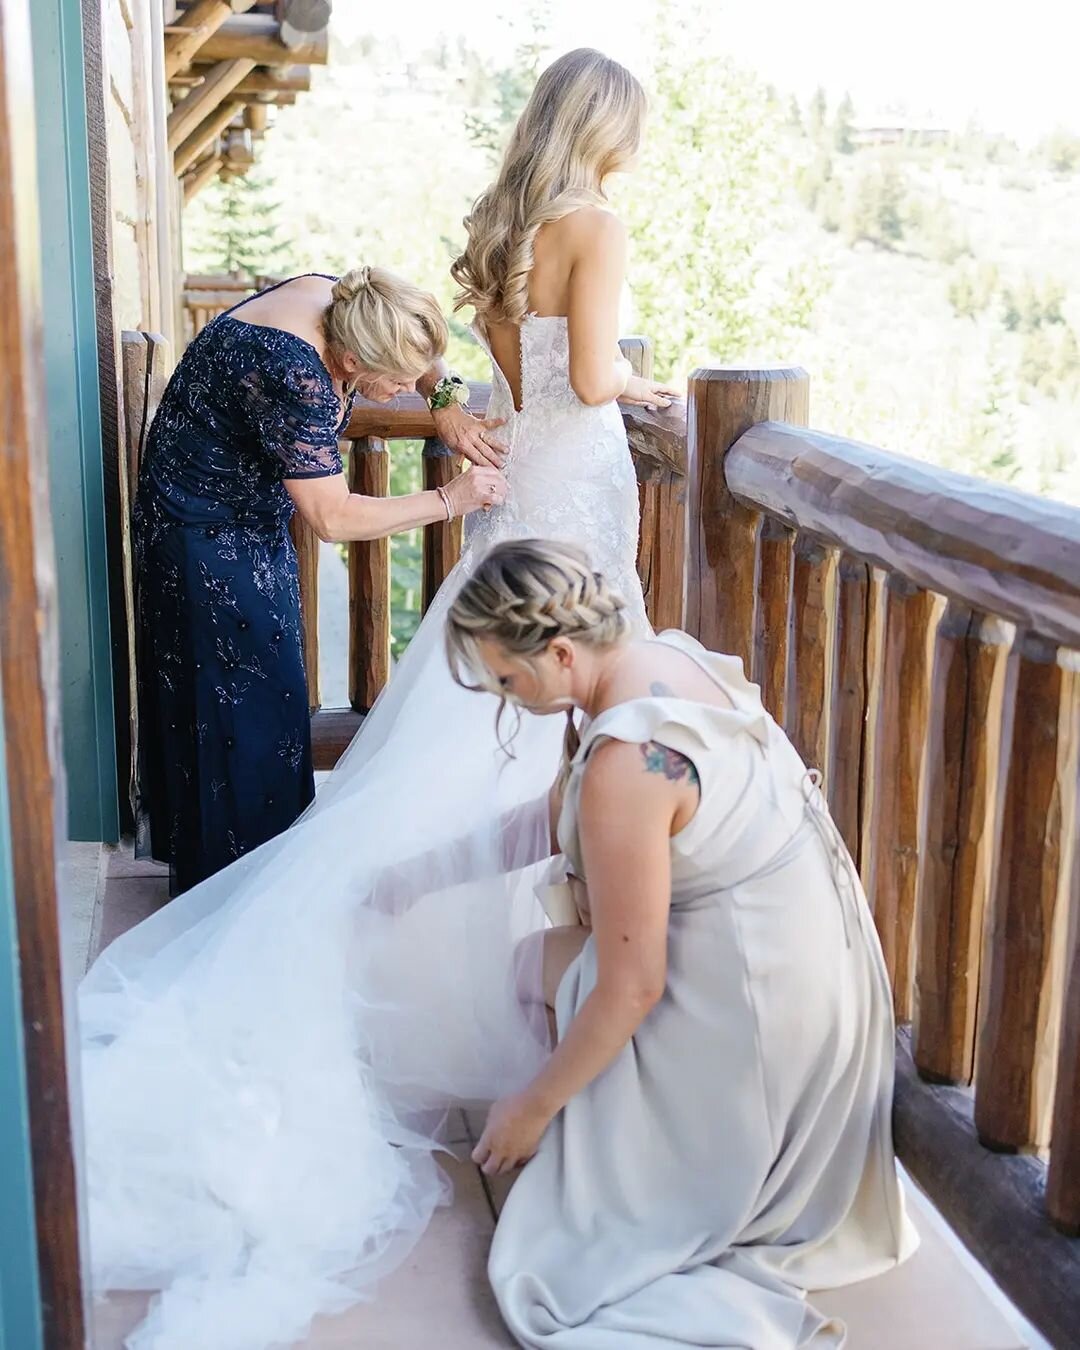 Getting ready will always be my favorite part of the wedding day. 👯🏼&zwj;♀️

Photography: @saraporterphotos
Planning: @kellykarliweddings